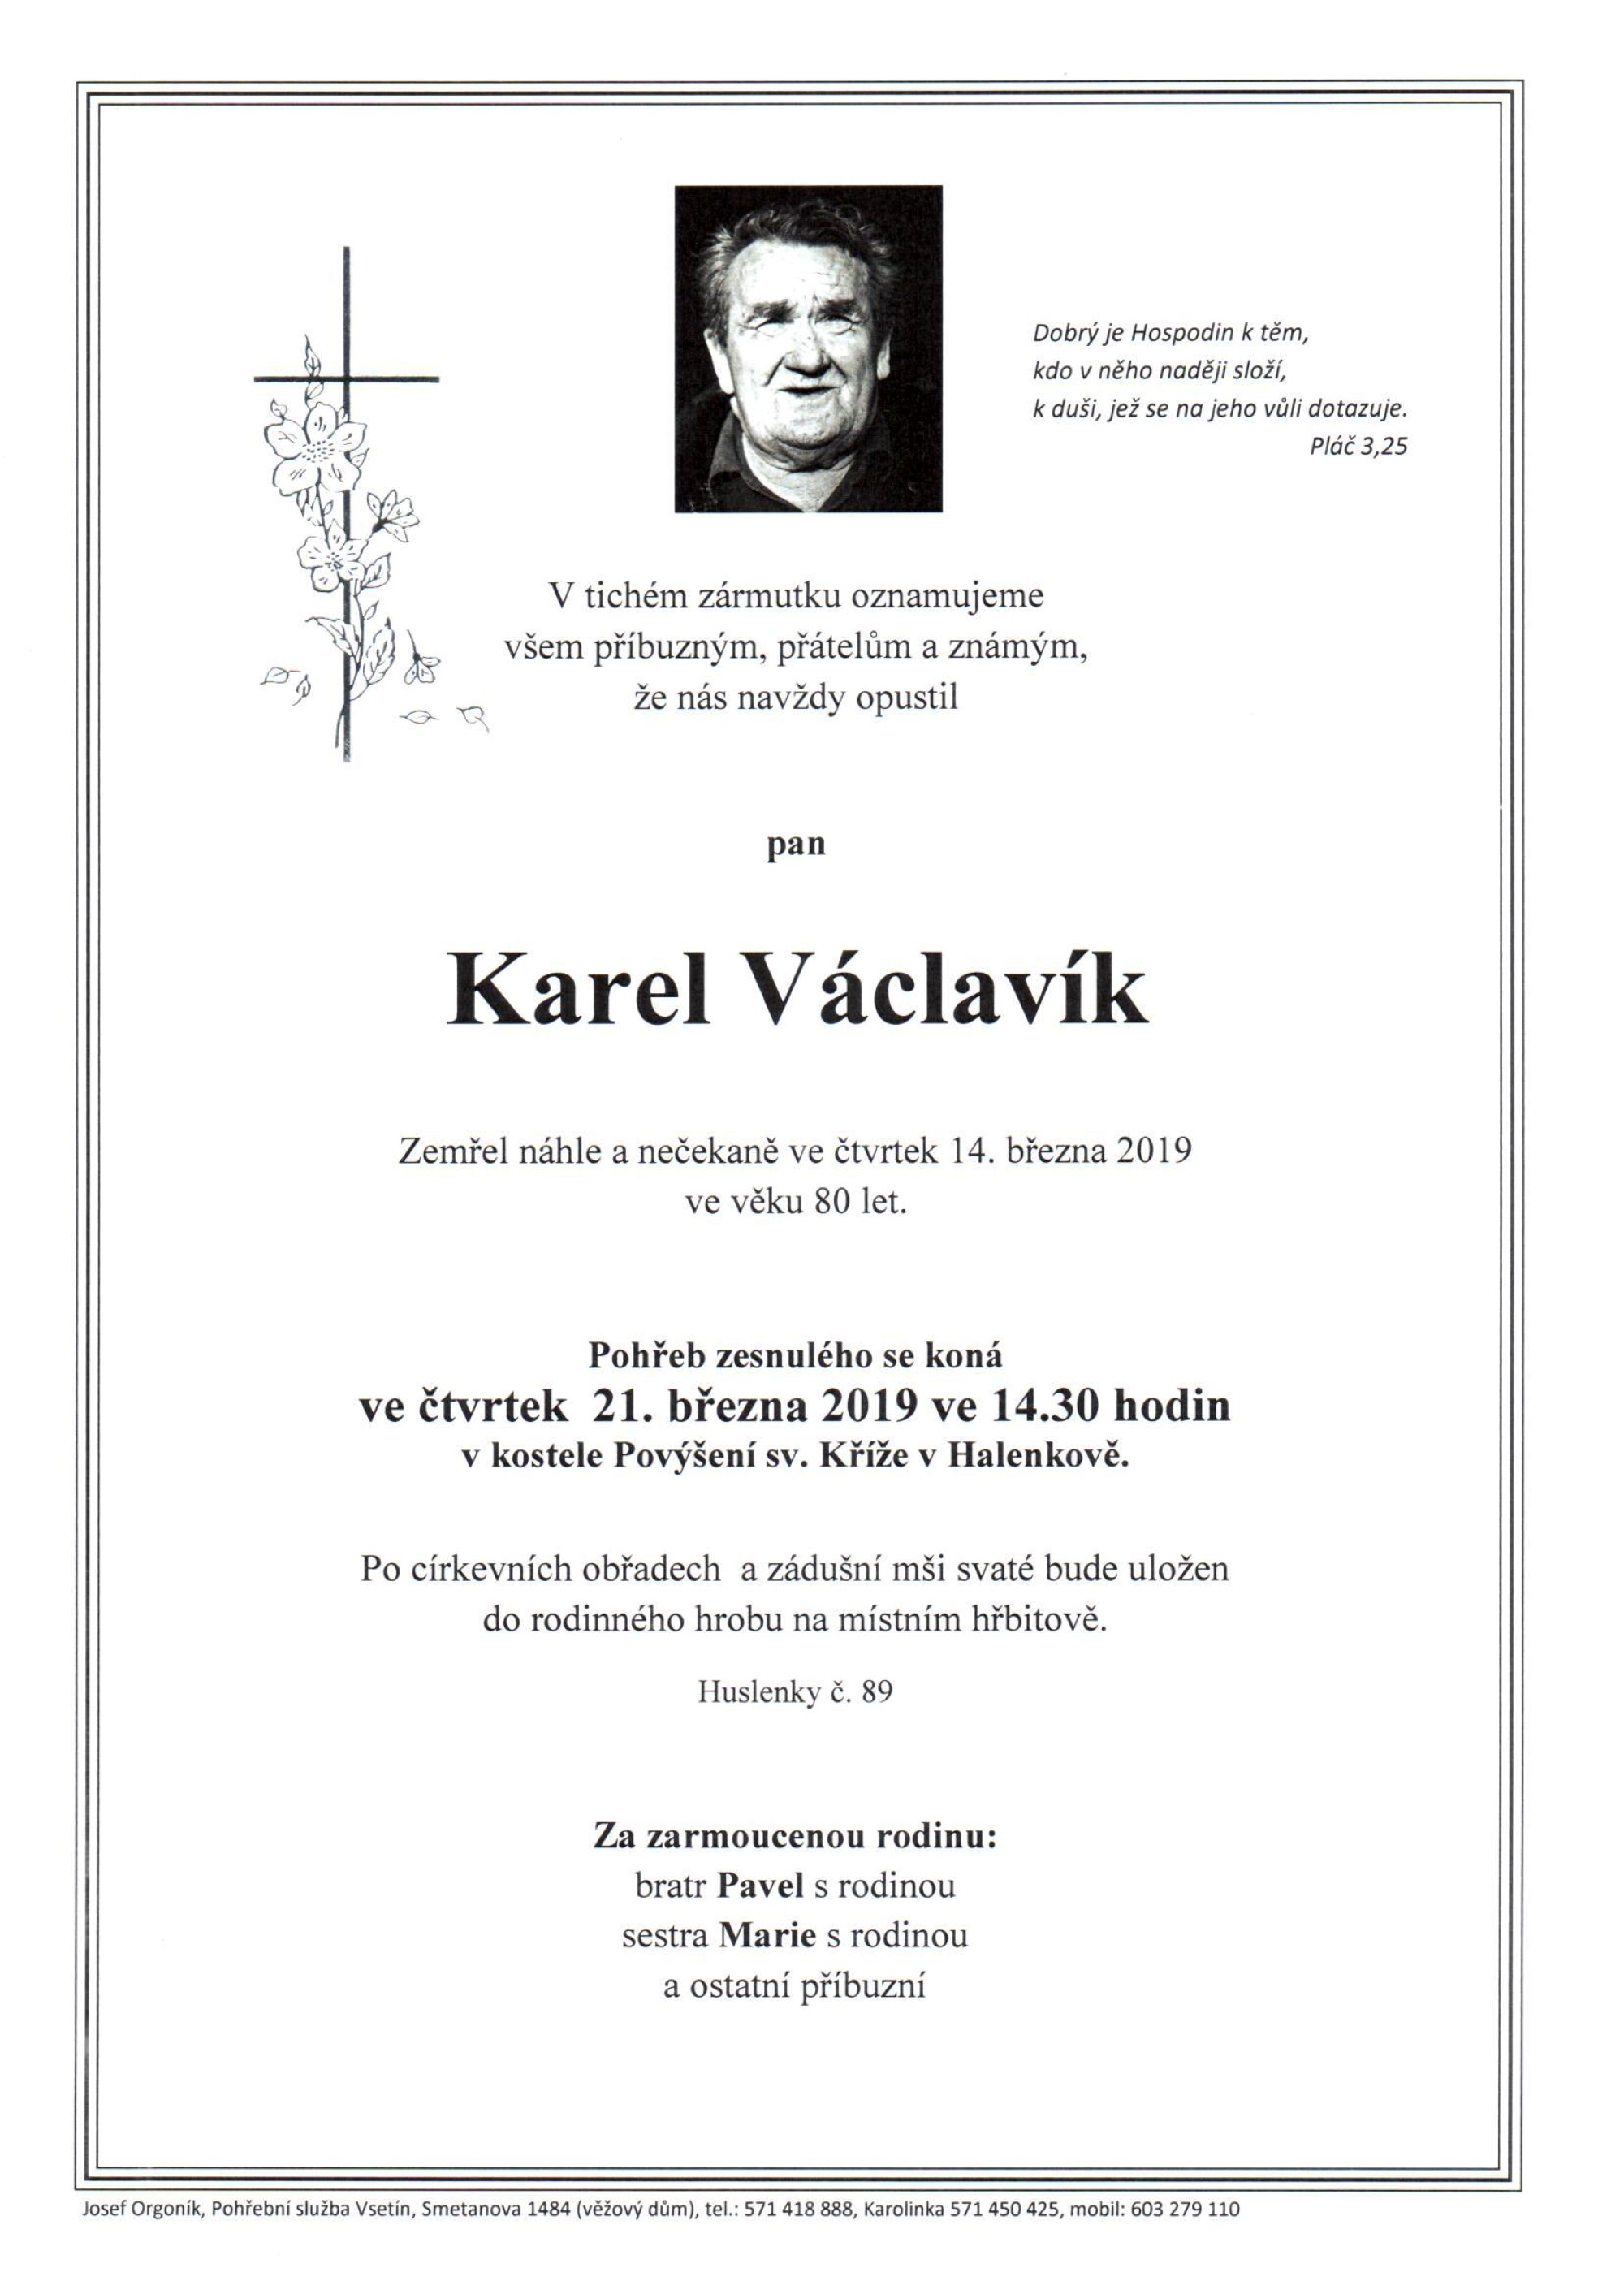 Karel Václavík